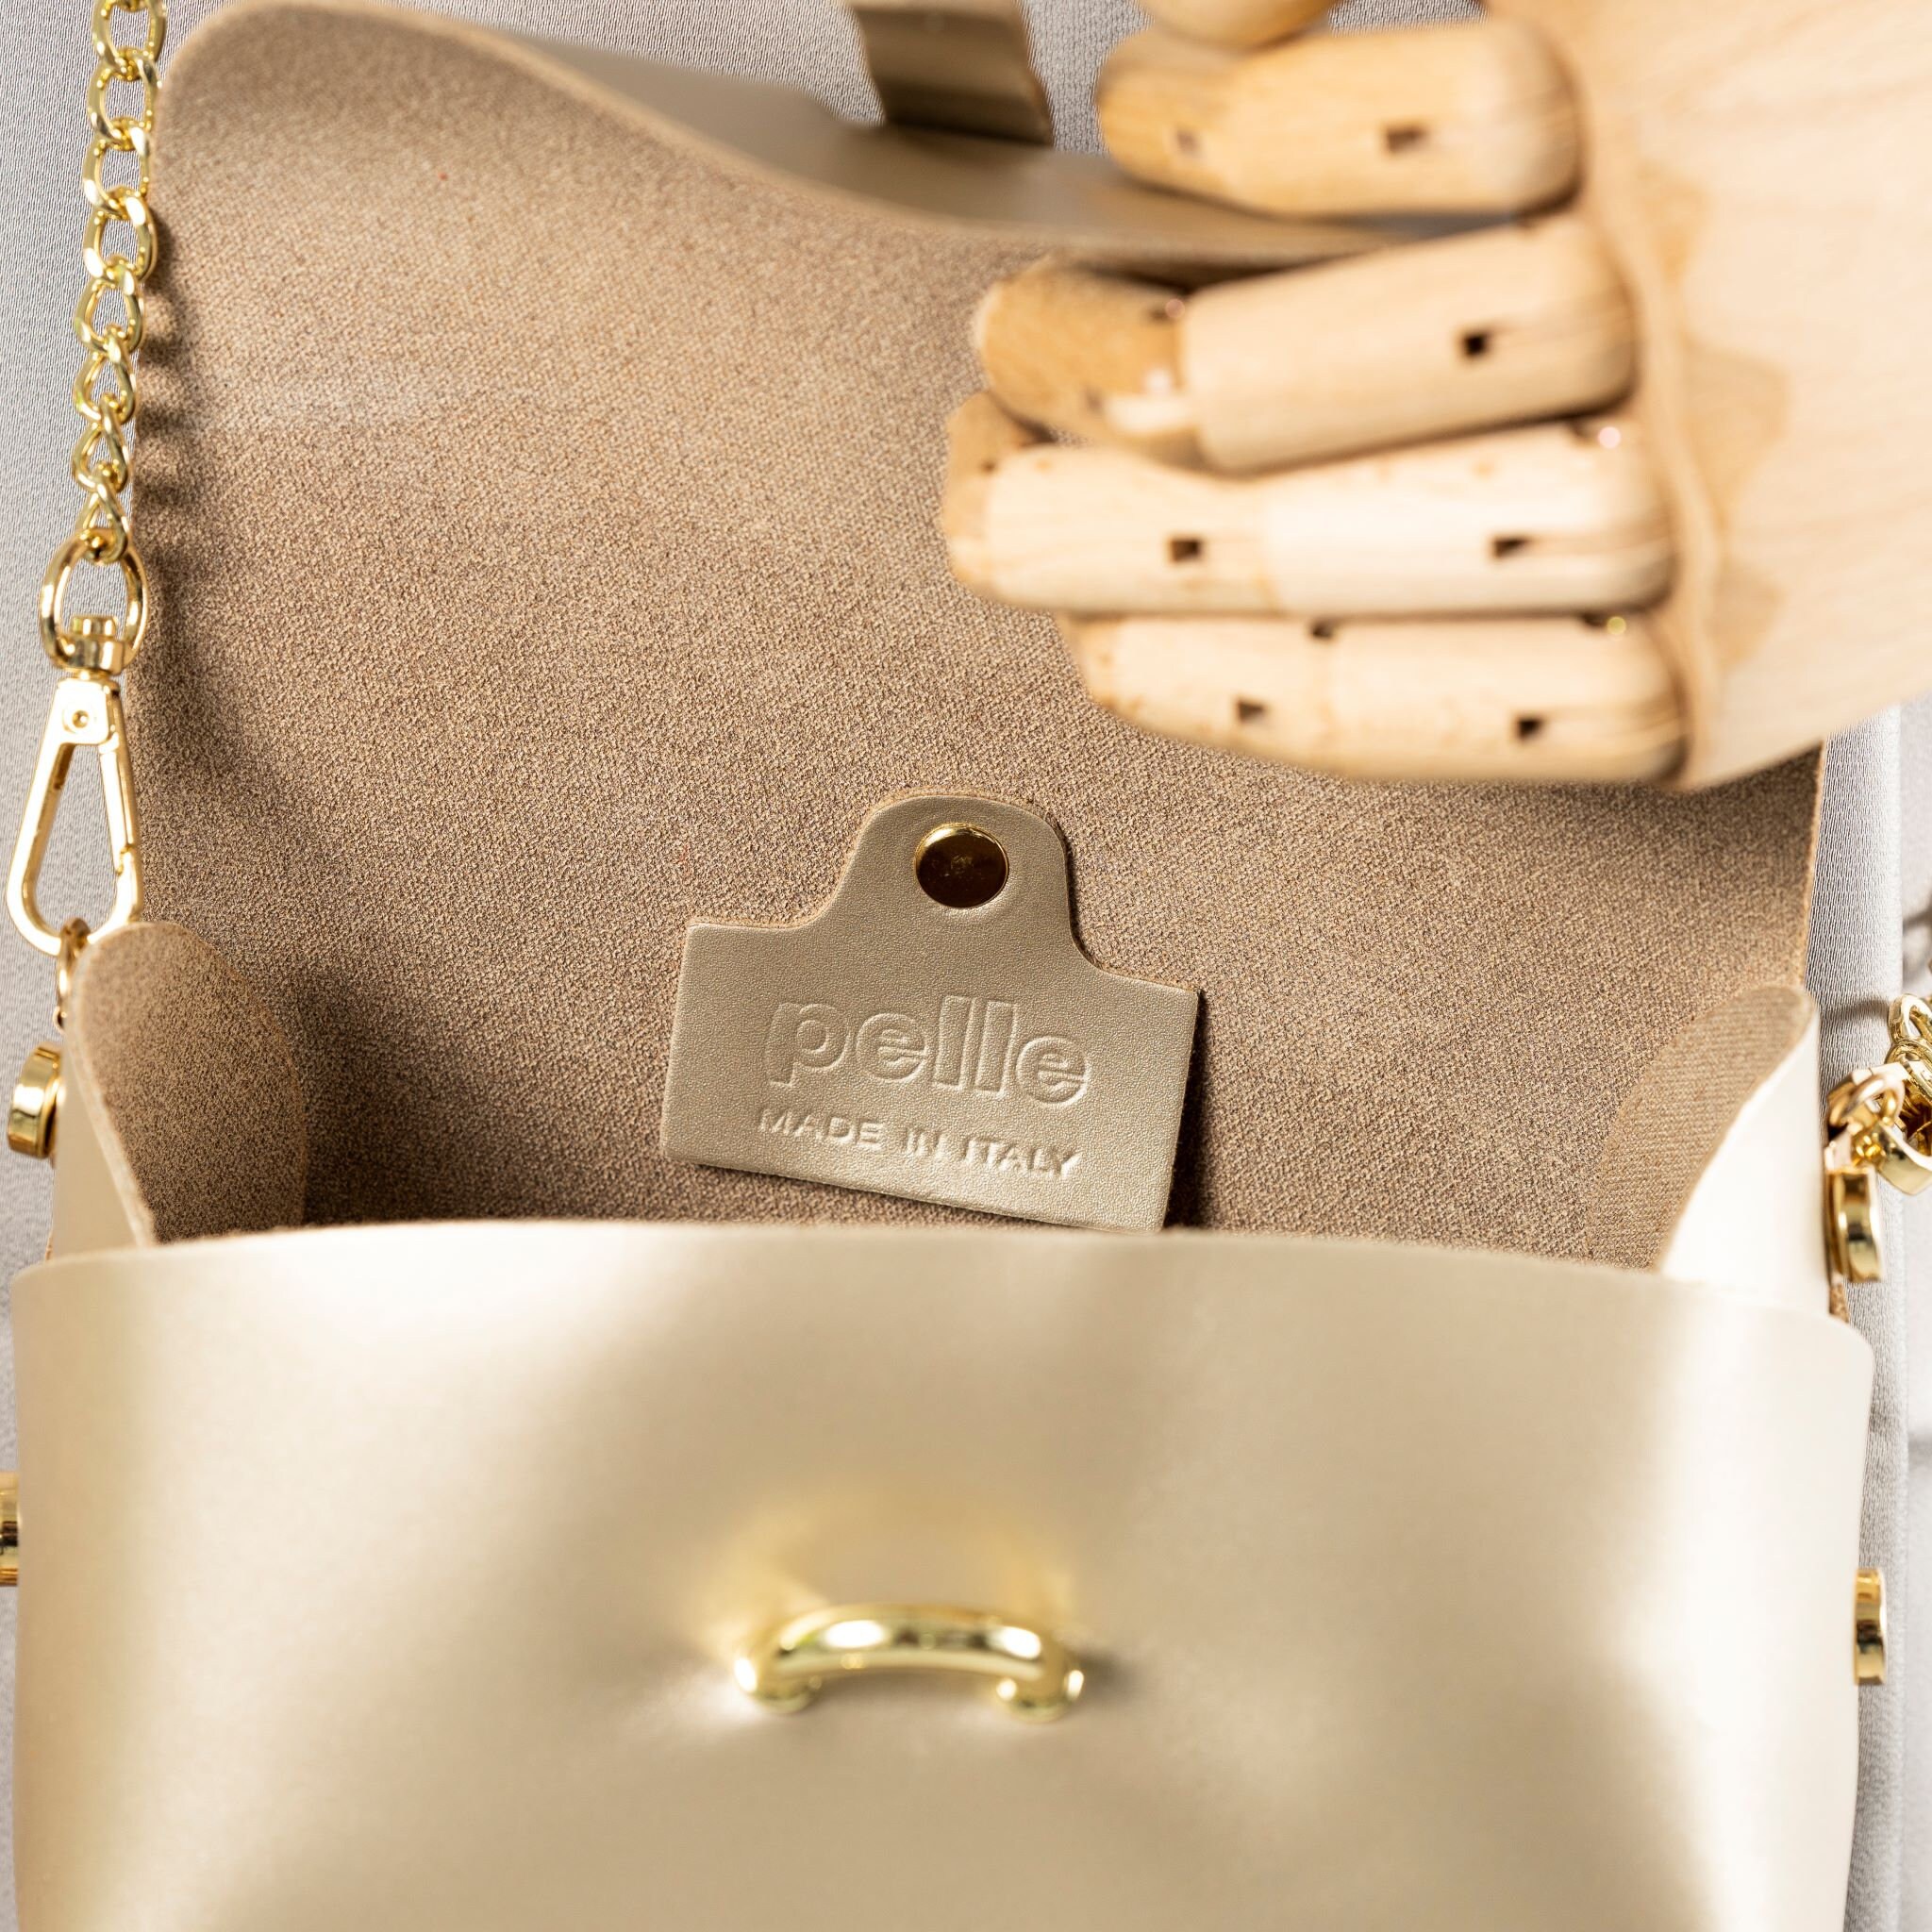 Buy Gold Leather Crossbody Bag Chain Strap Small Crossbody Online